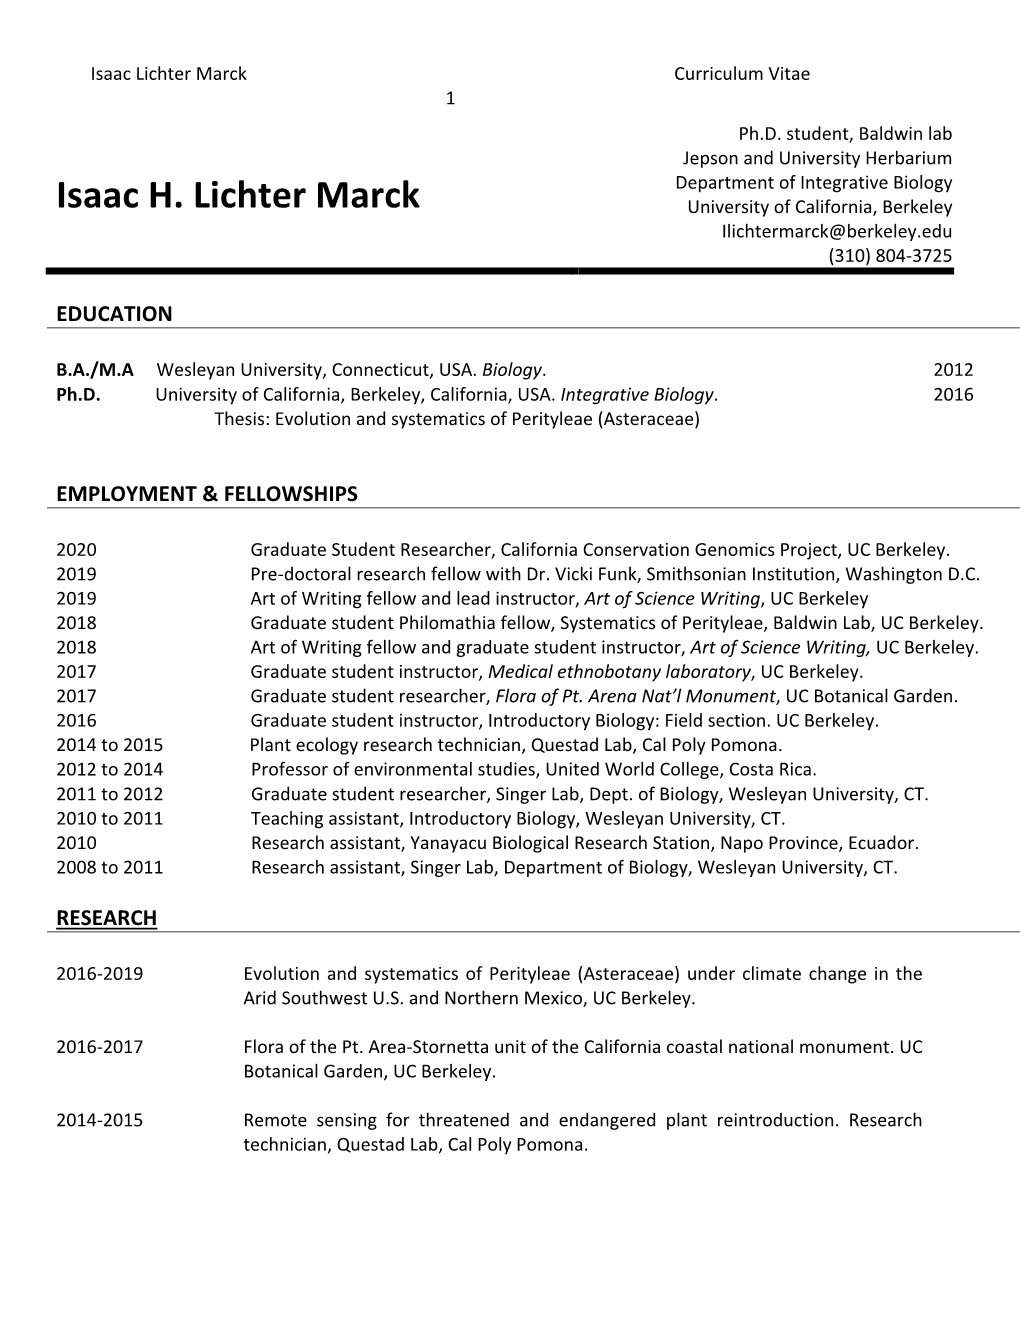 Isaac H. Lichter Marck University of California, Berkeley Ilichtermarck@Berkeley.Edu (310) 804-3725